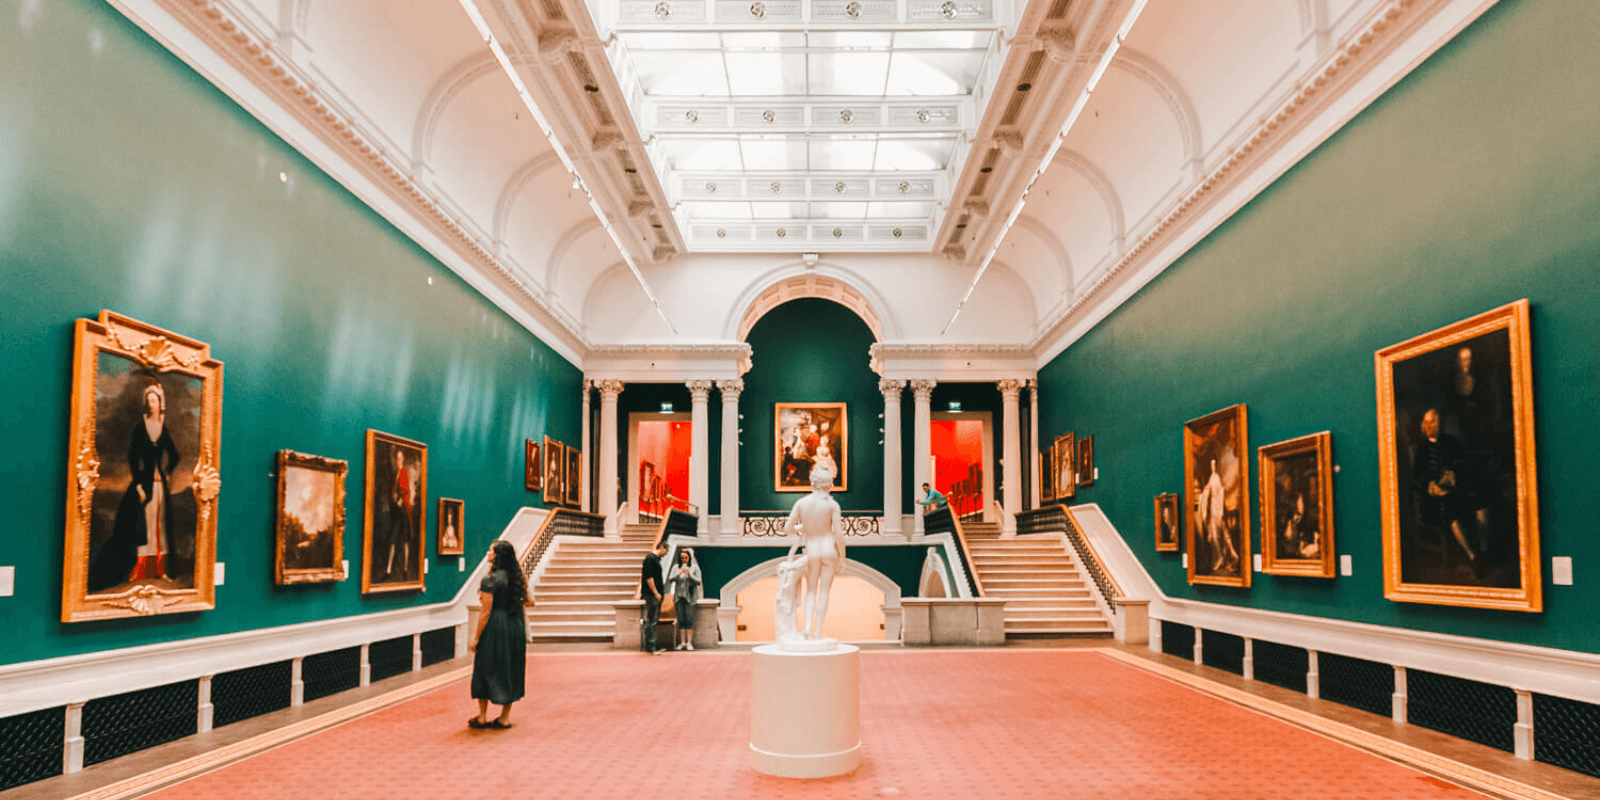 National Gallery - Museum in Dublin, Ireland